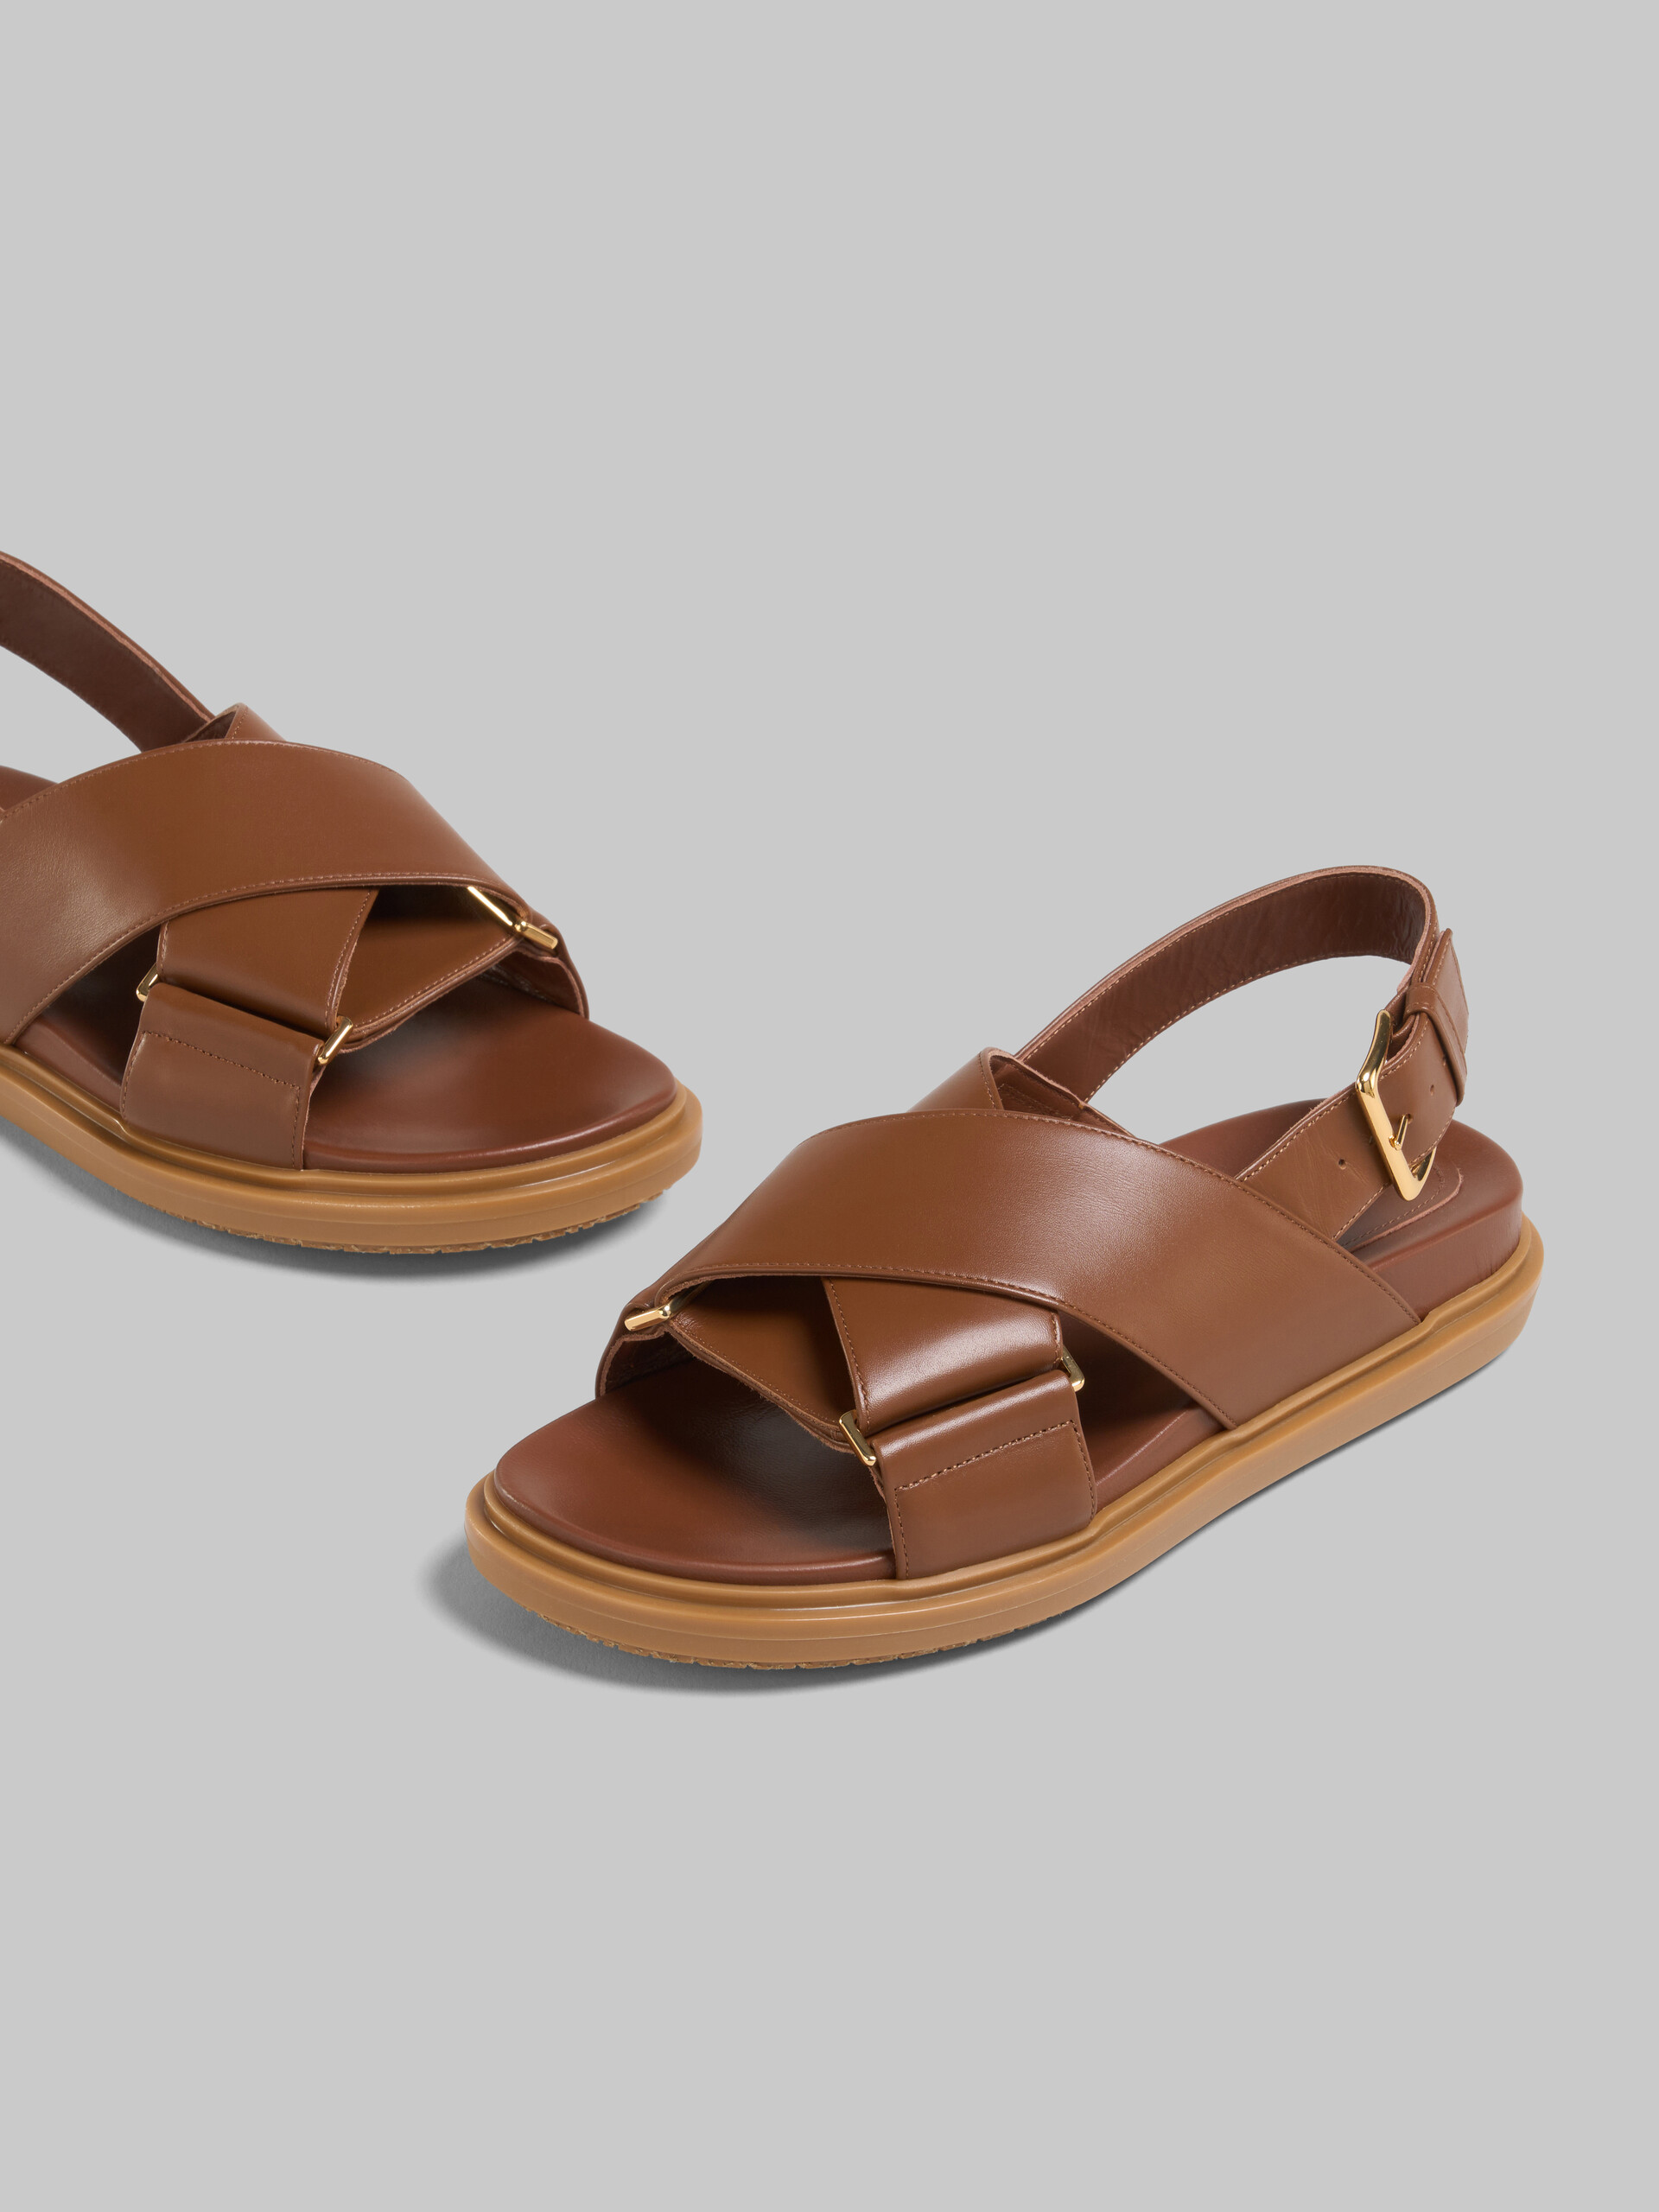 Brown leather Fussbett - Sandals - Image 5